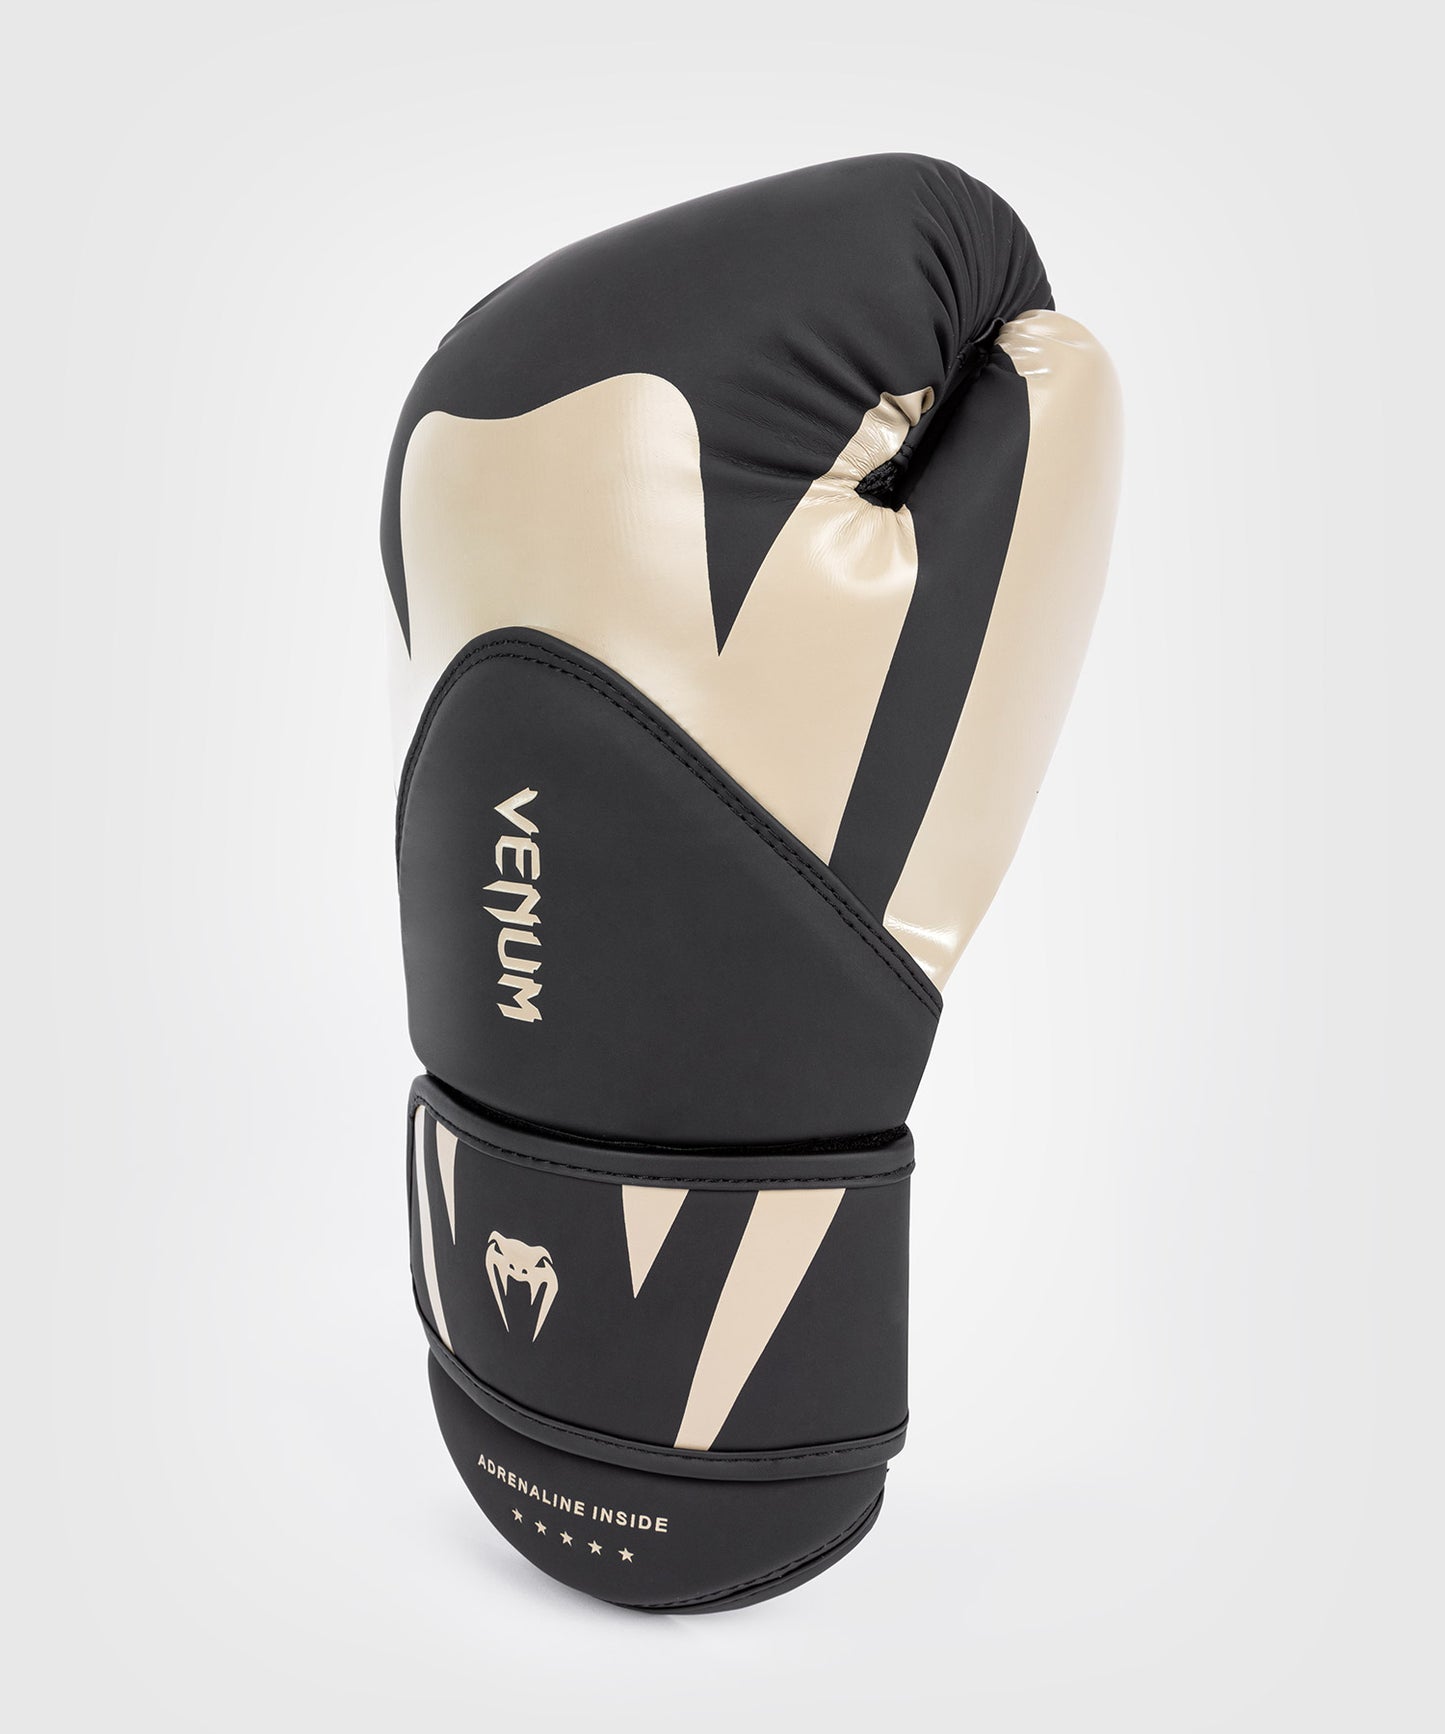 Venum Challenger 4.0 Boxing Gloves - Black/Beige